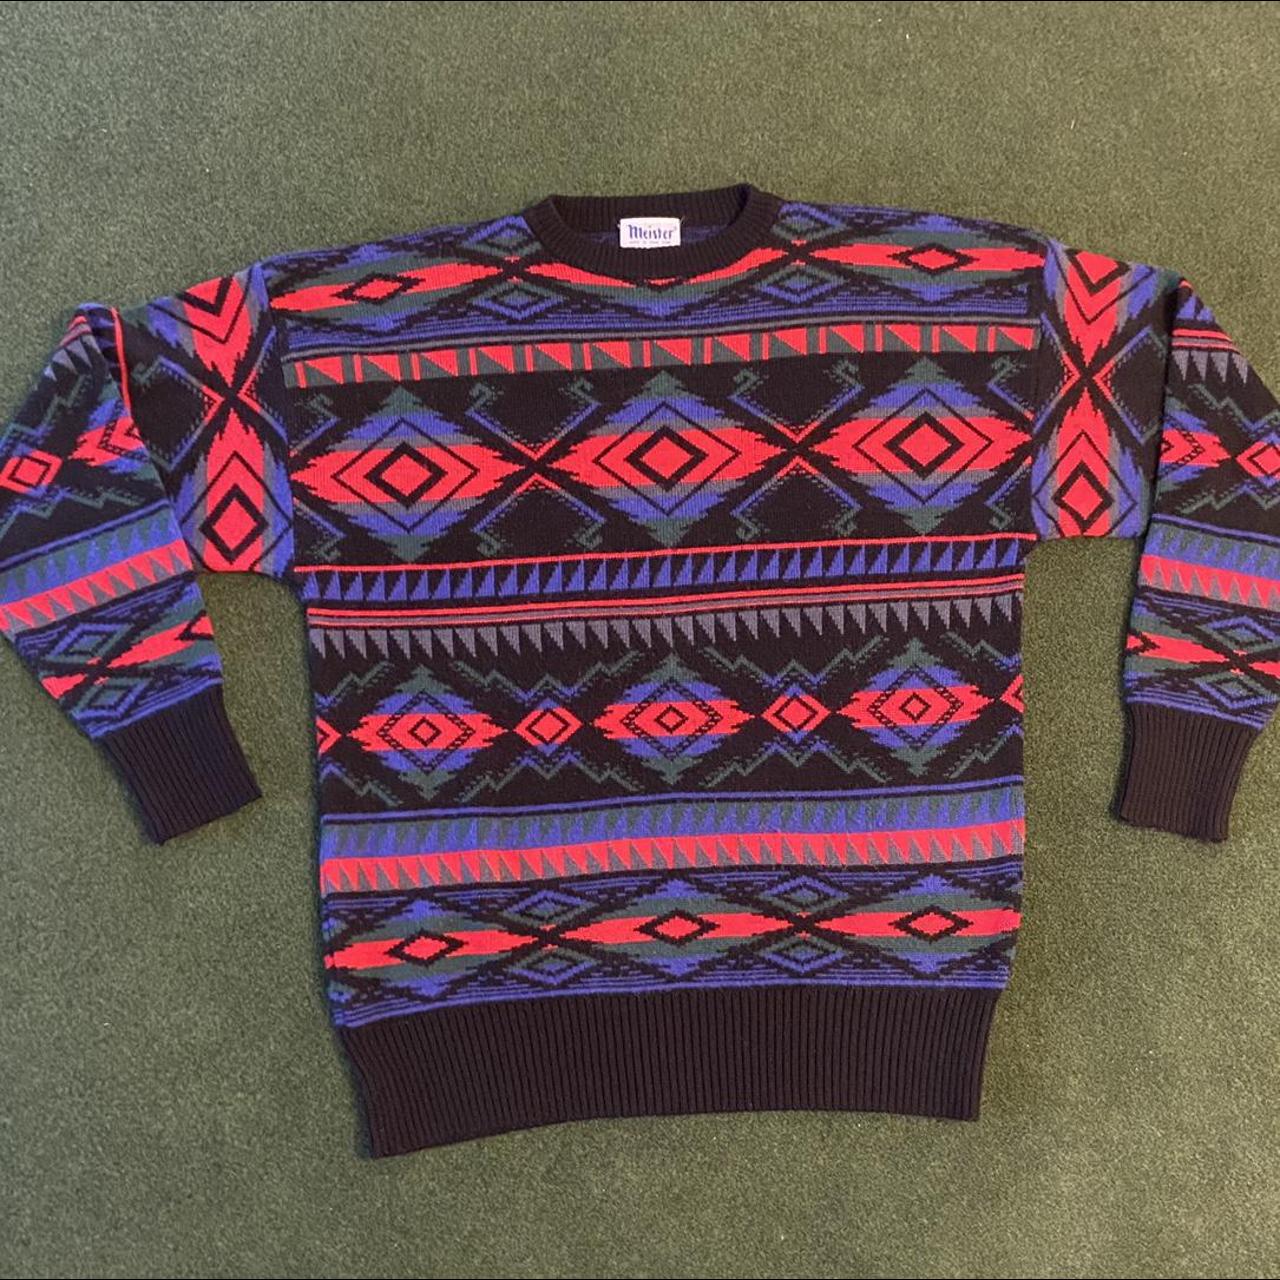 Product Image 1 - Vintage “Meister” Sweater

Size: XL

Color: Black/Multicolor